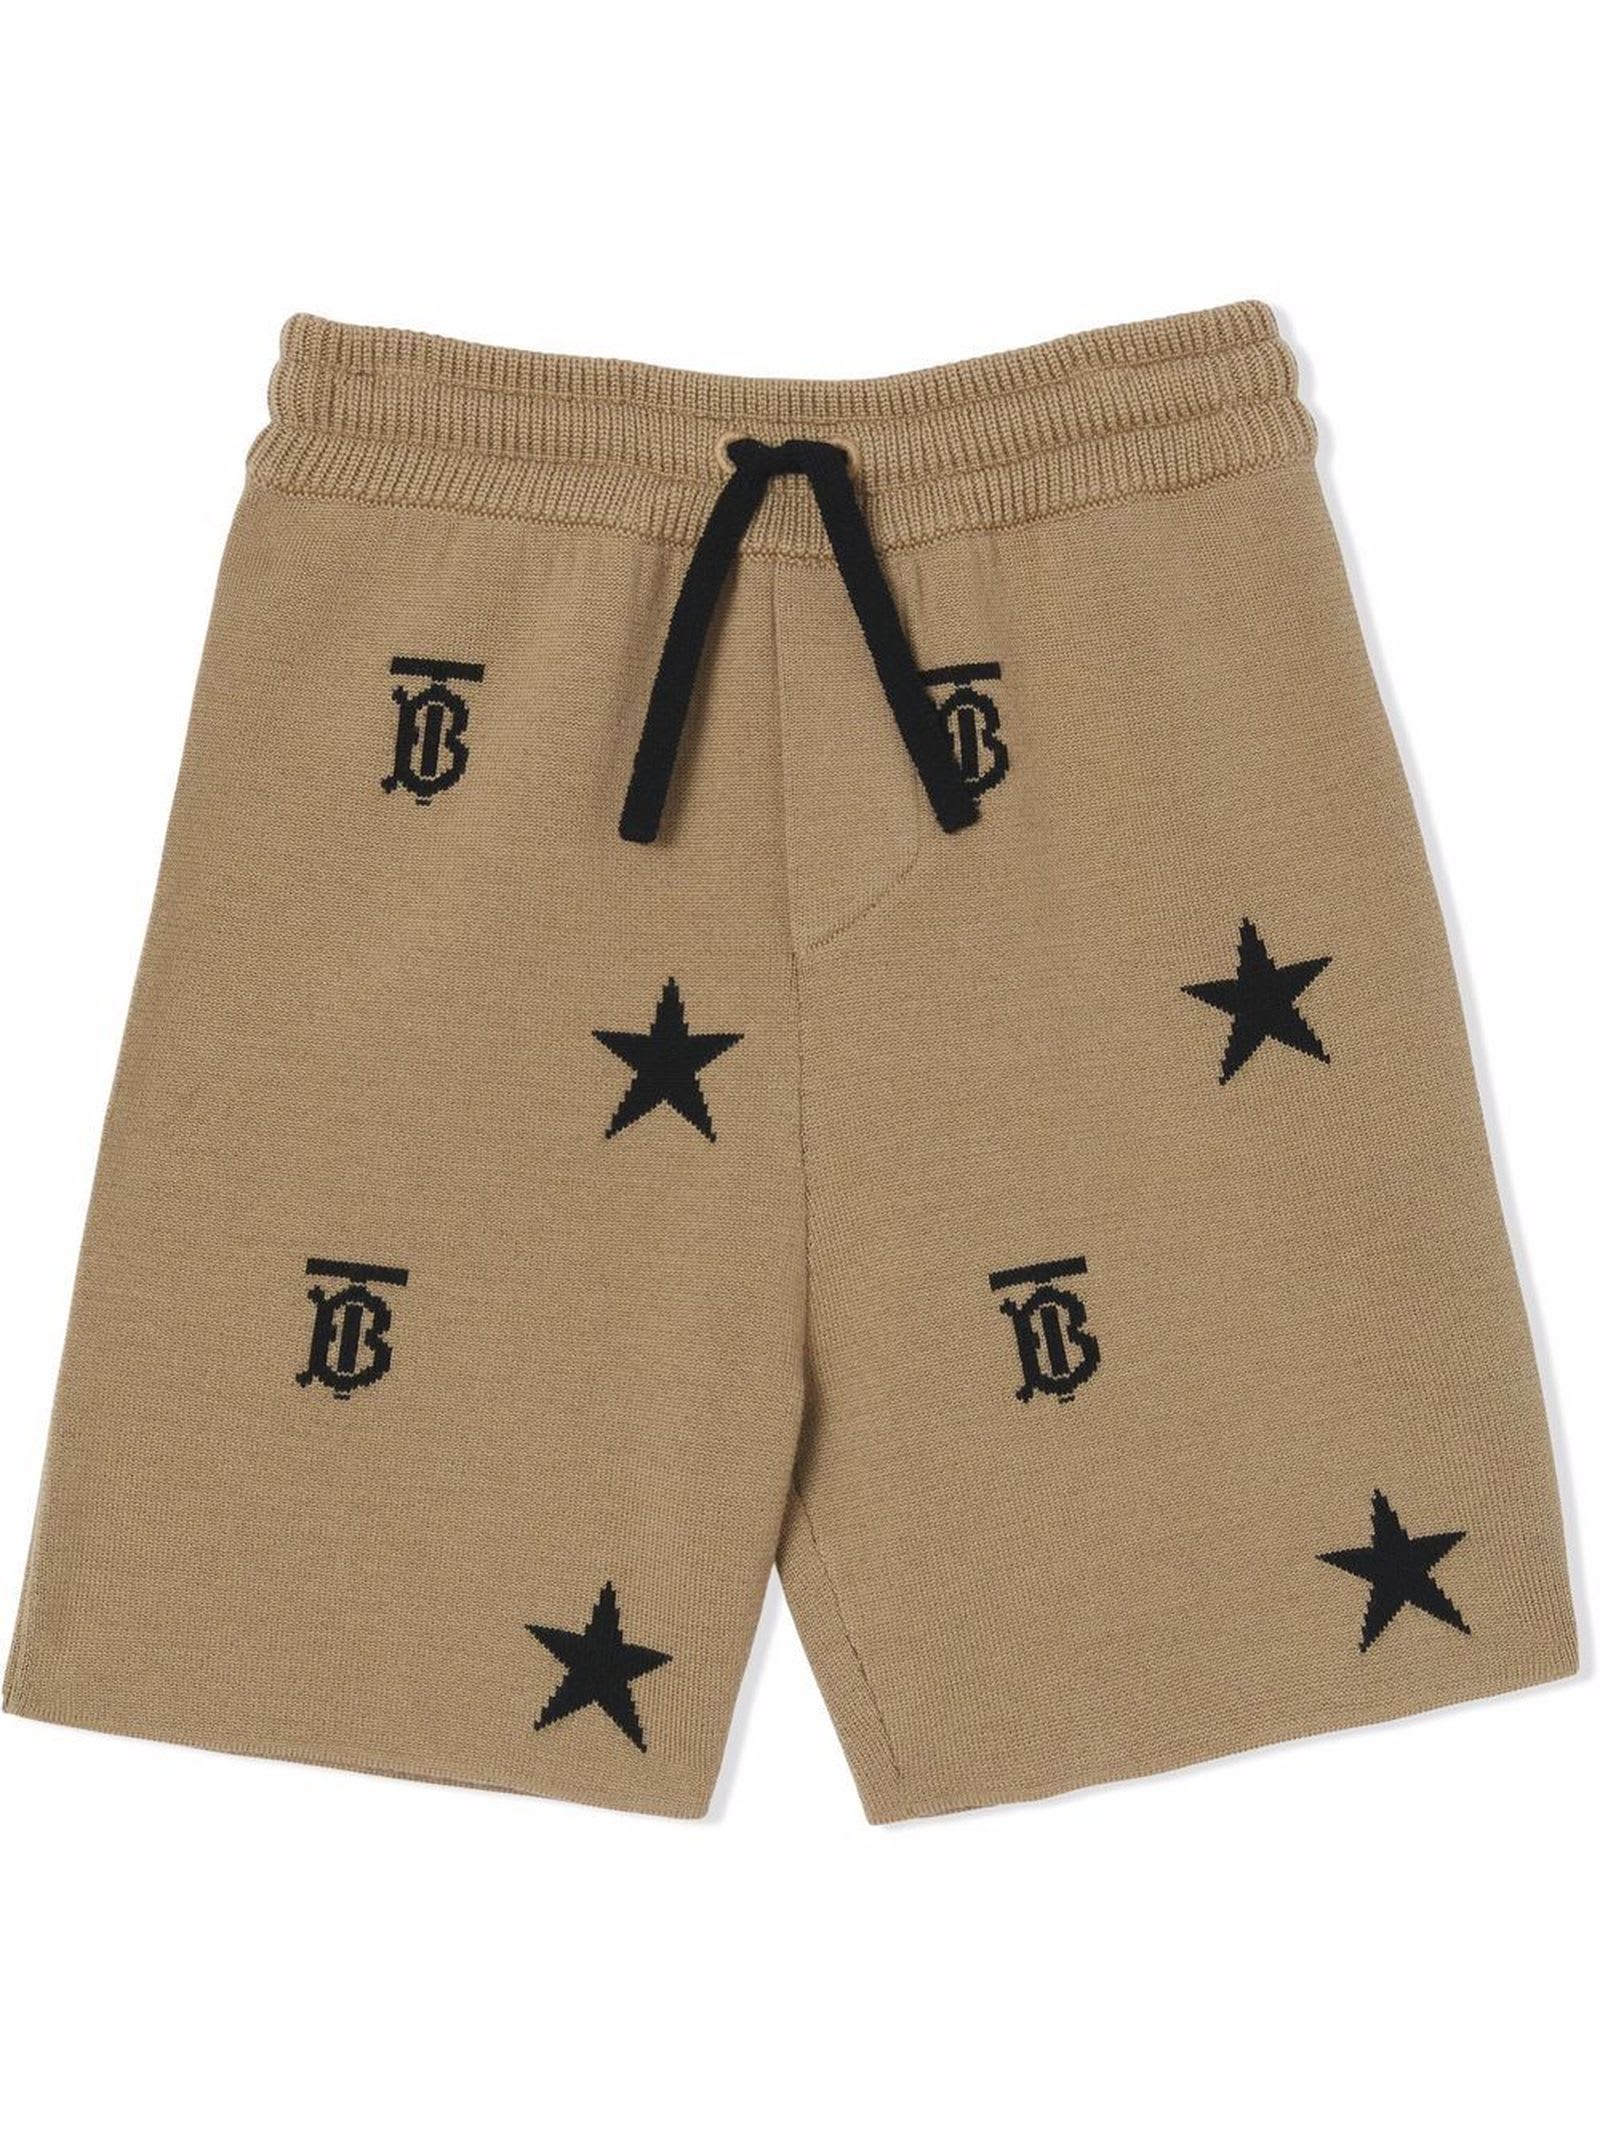 Burberry Beige Wool Shorts